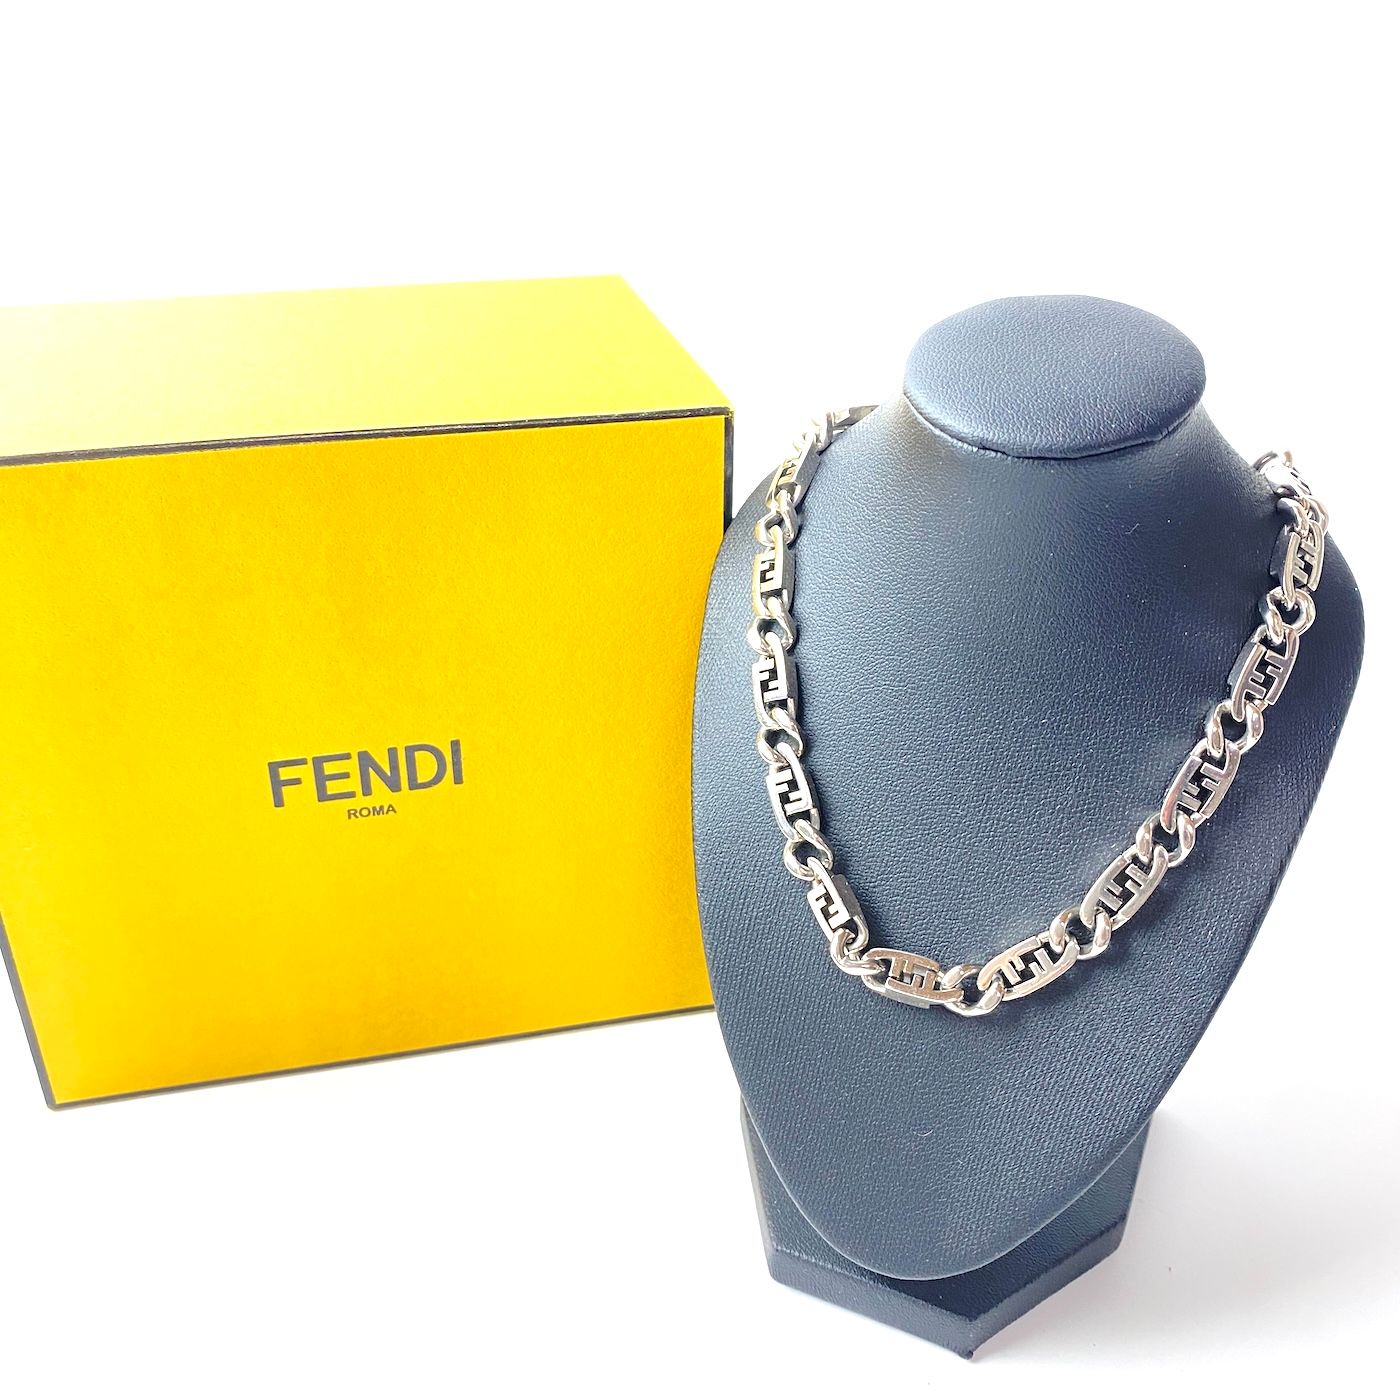 FENDI オーロック FFロゴ チェーン チョーカー ネックレス 50cm